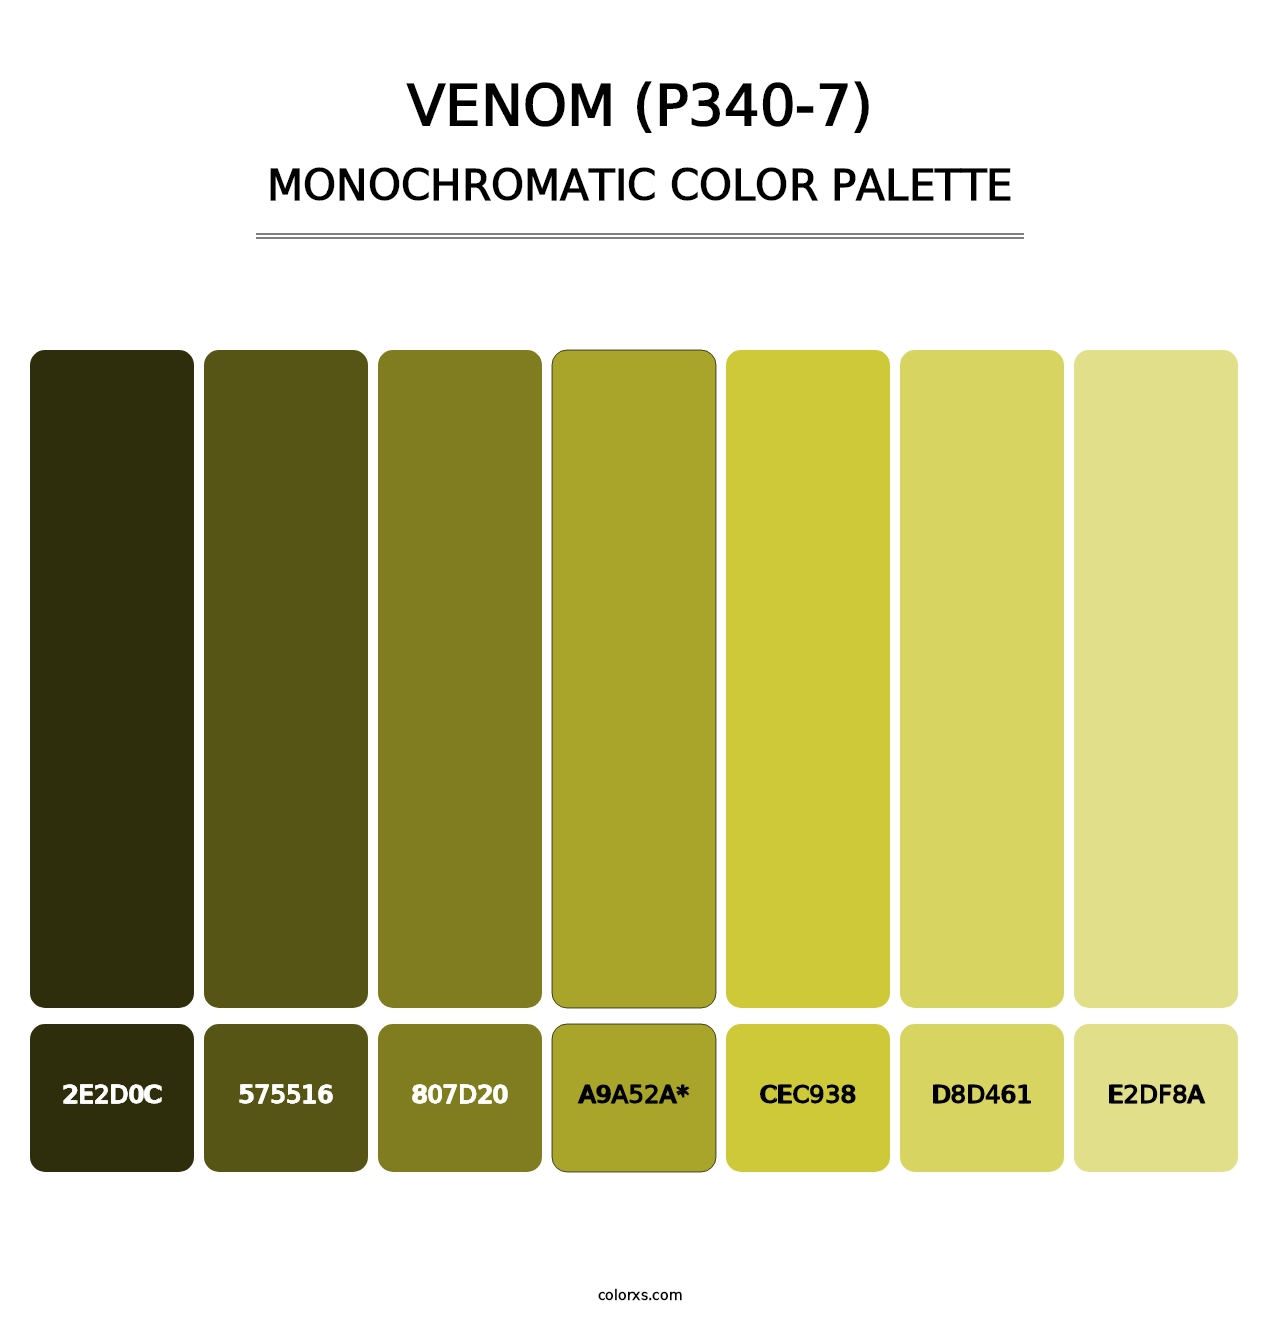 Venom (P340-7) - Monochromatic Color Palette